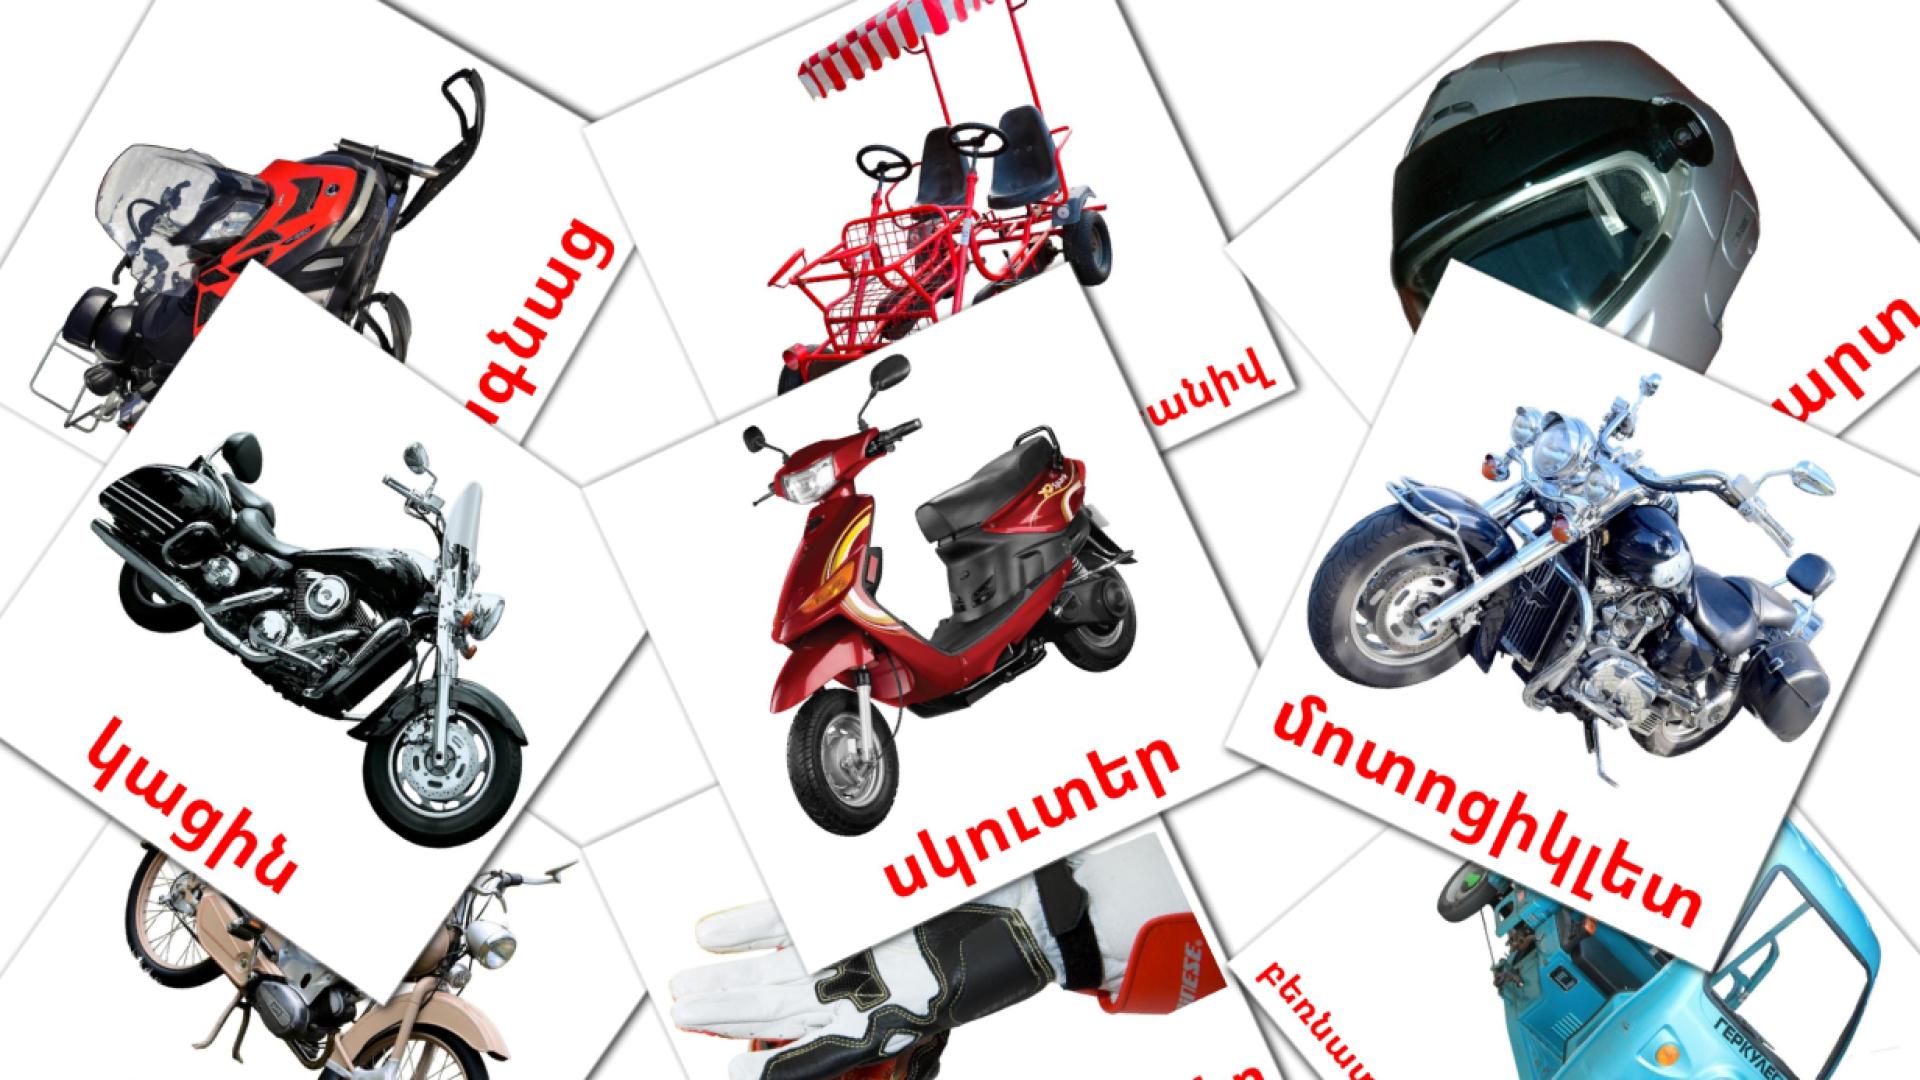 Motorcycles - armenian vocabulary cards